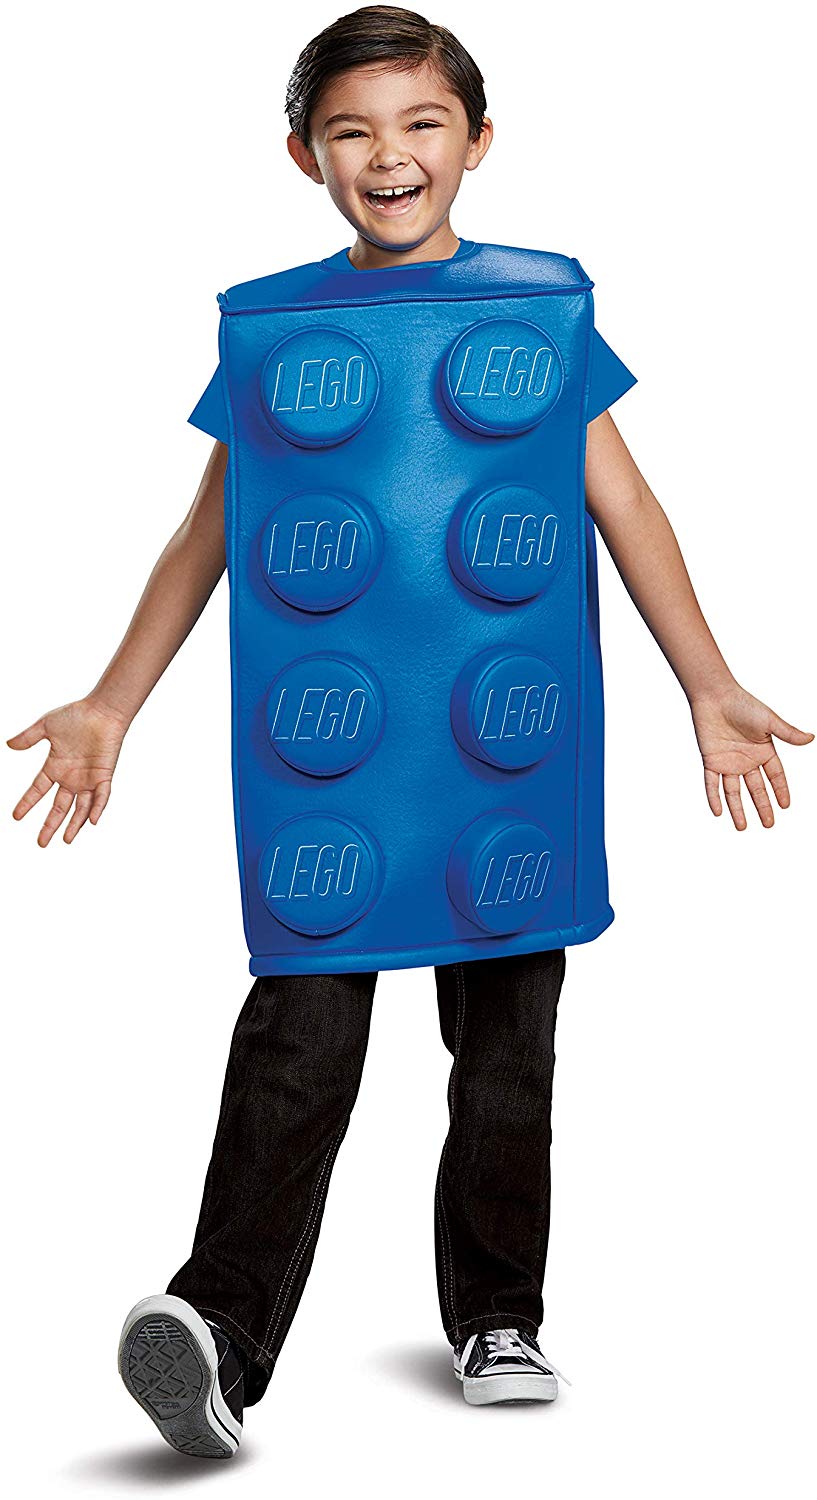 Lego Childrens Lego Costume